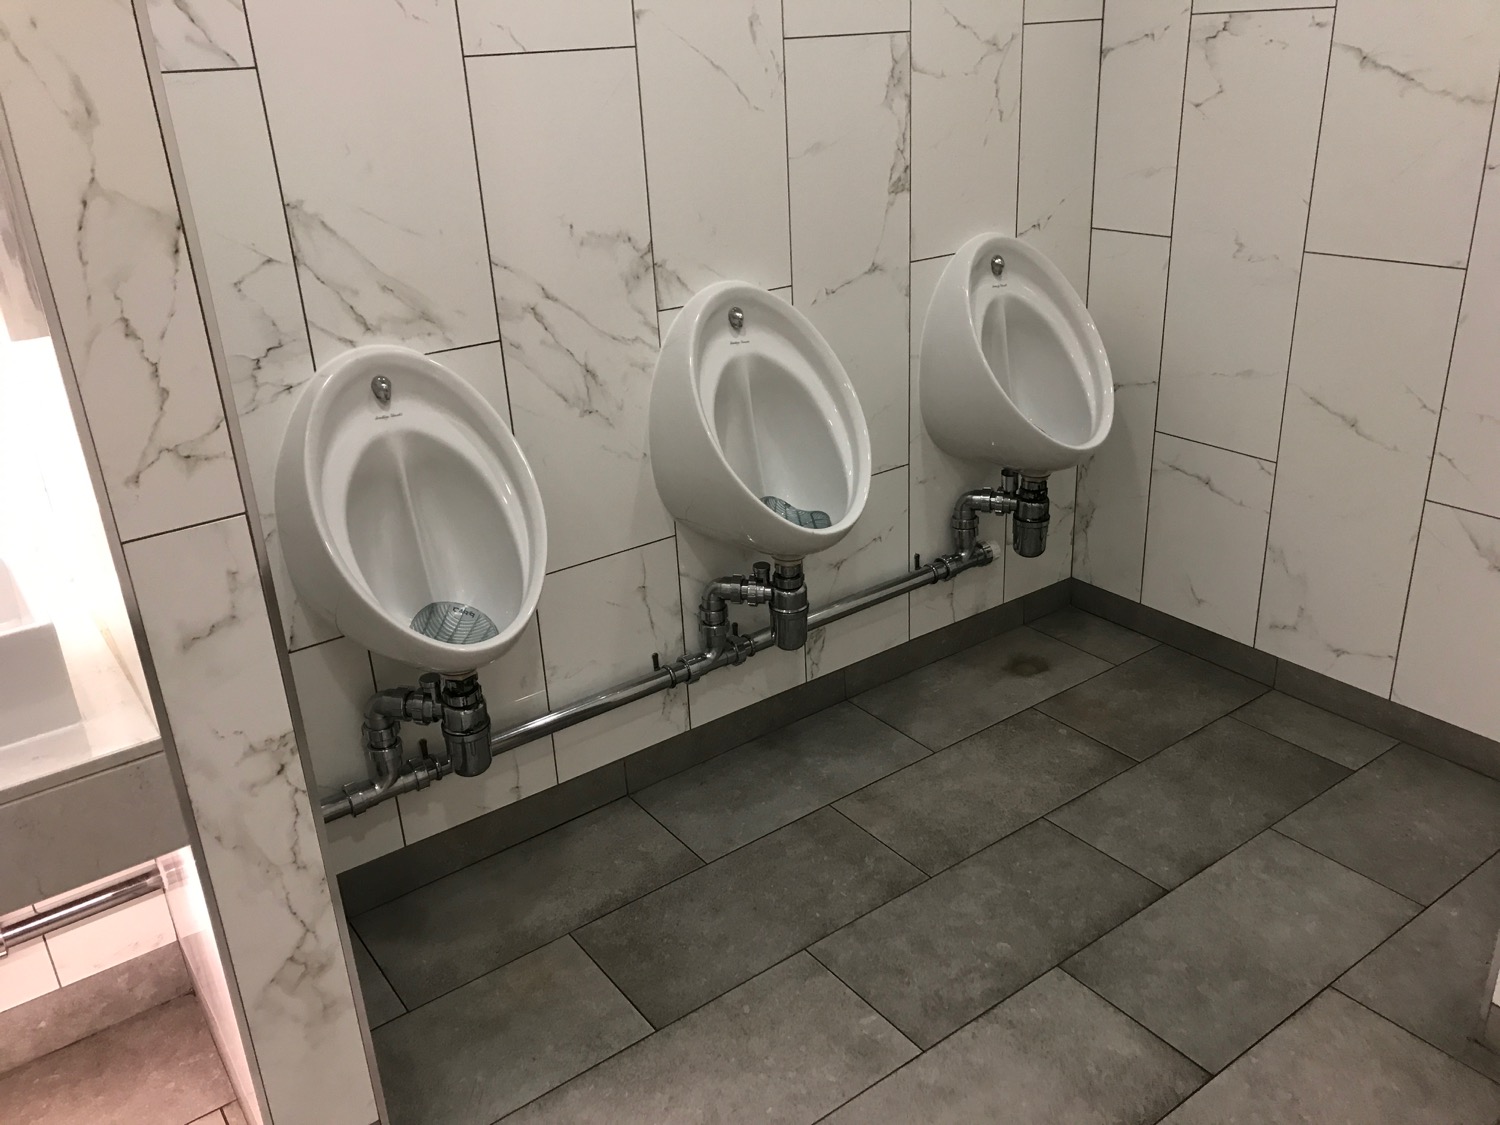 a row of urinals in a bathroom